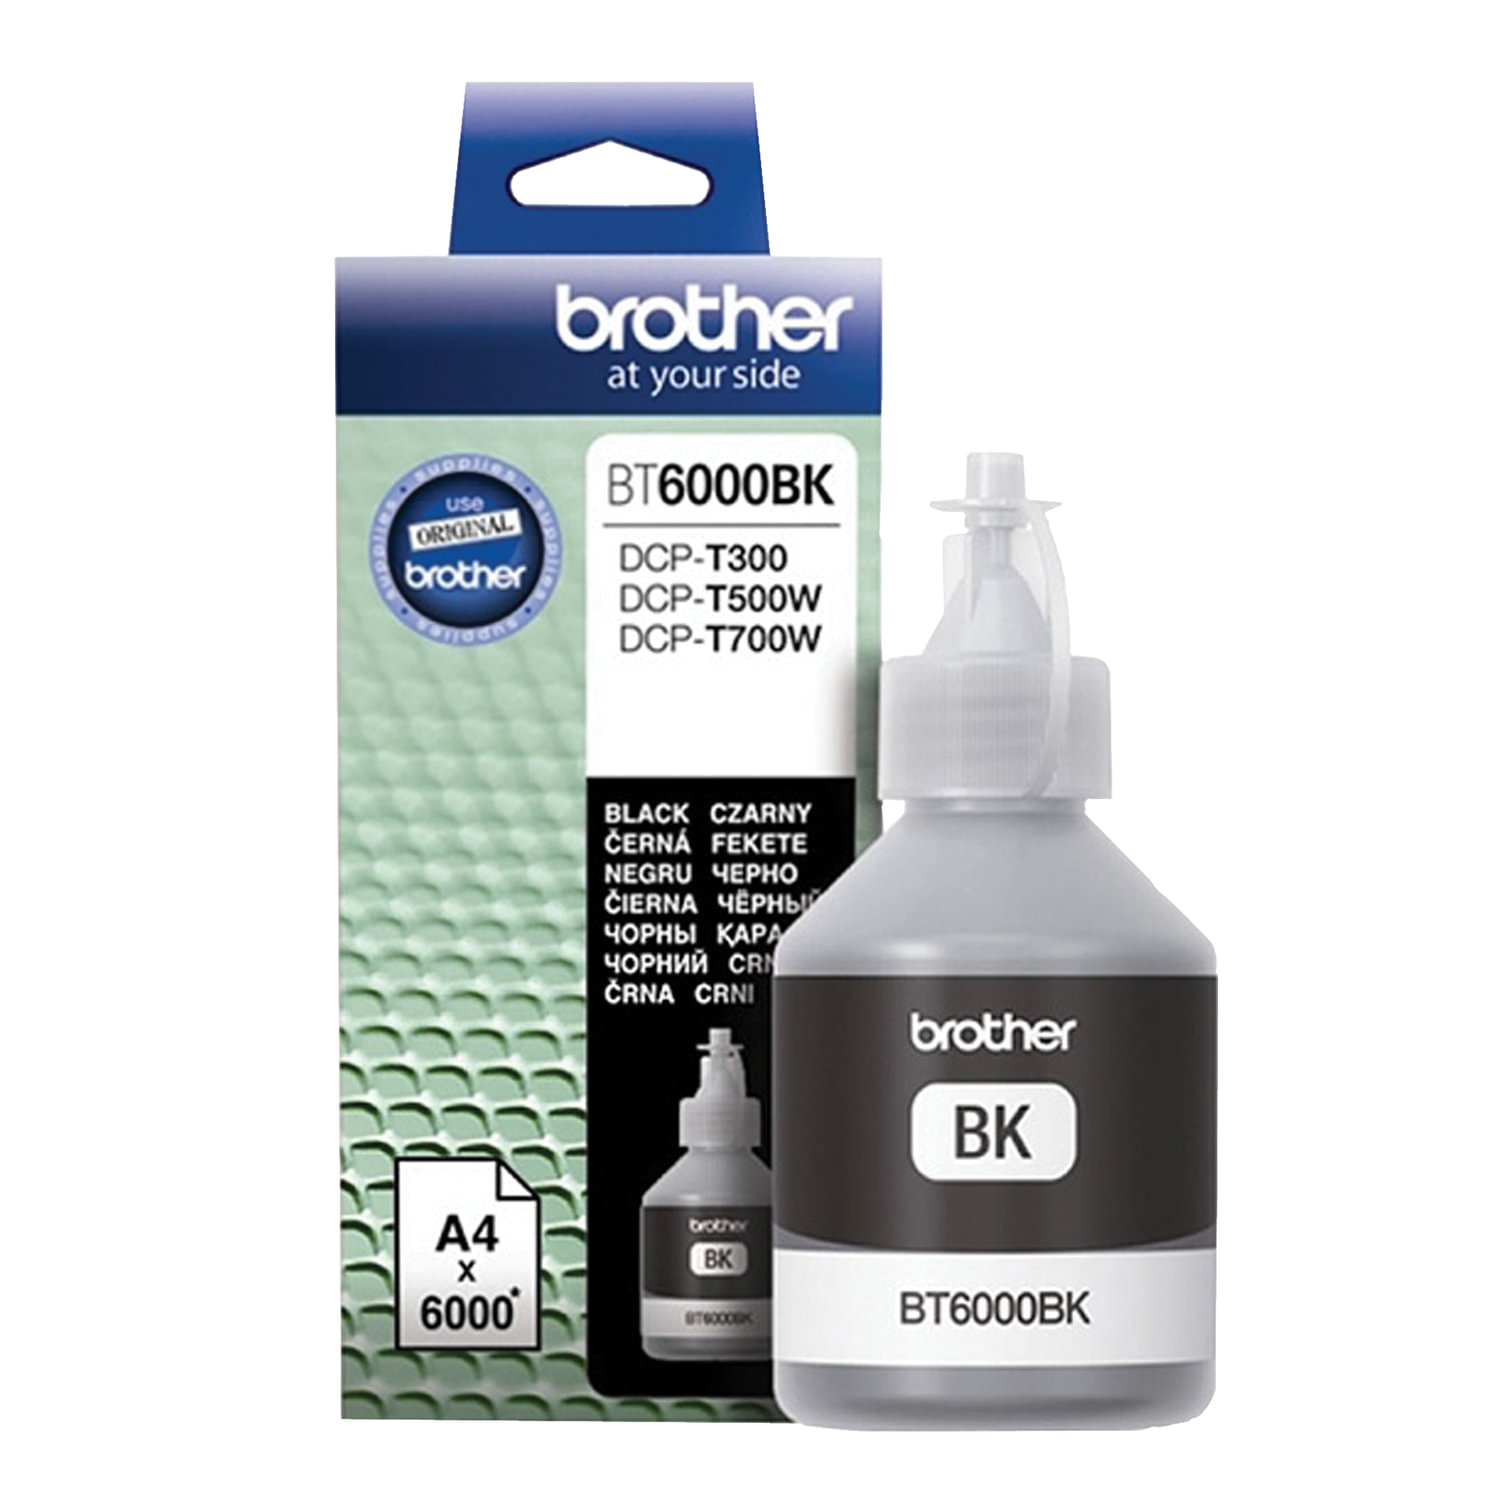  BROTHER BT6000BK